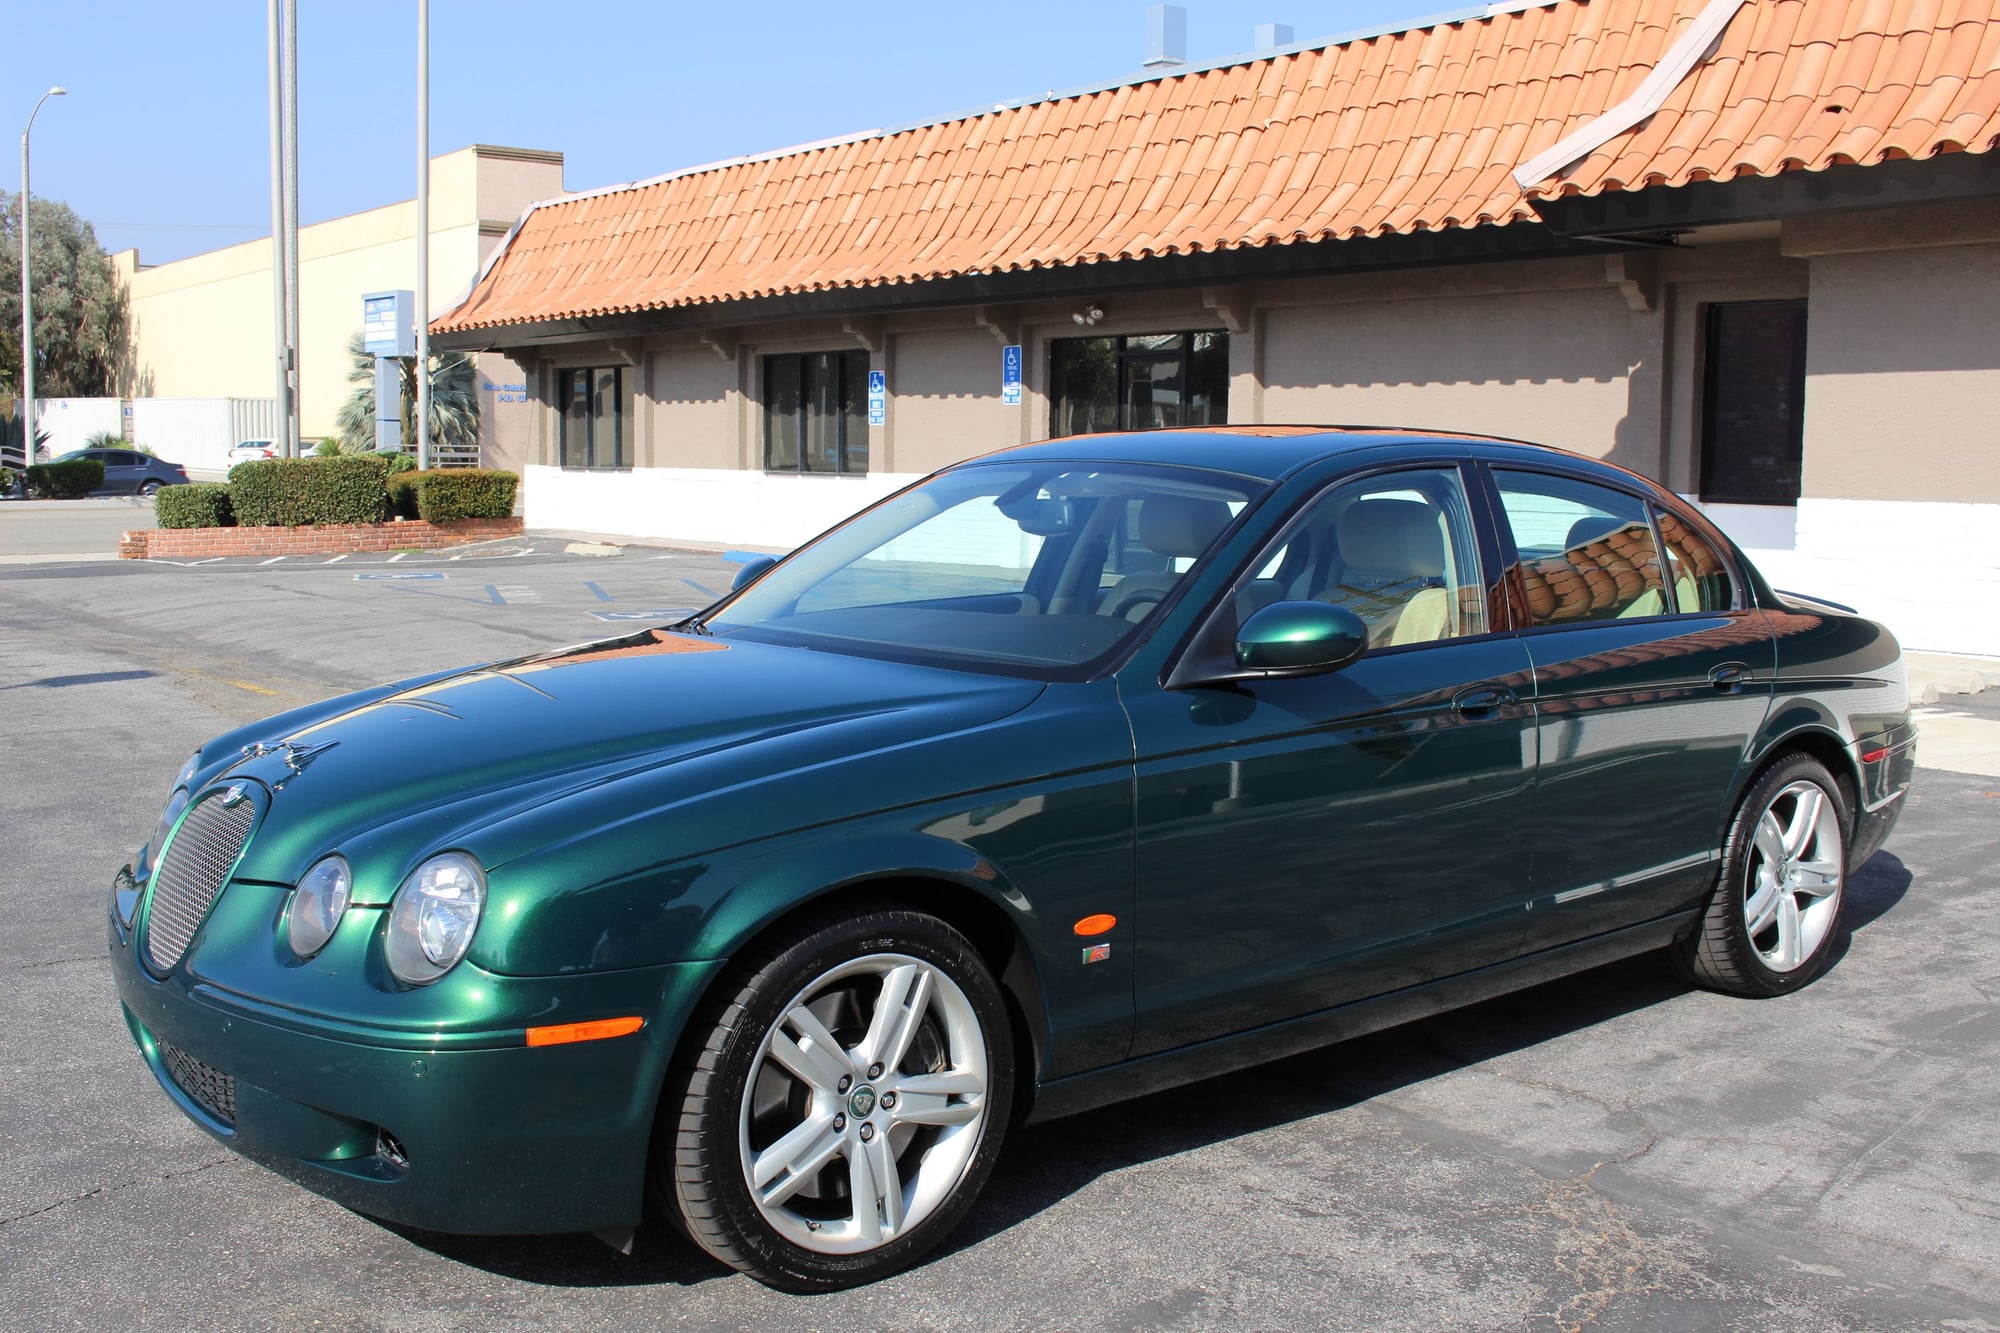 2006 Jaguar S-Type - Mint 57k miles Jaguar S type R for sale - Used - VIN SAJWA03C361N54926 - 57,000 Miles - 8 cyl - Automatic - Sedan - Other - Alhambra, CA 91801, United States